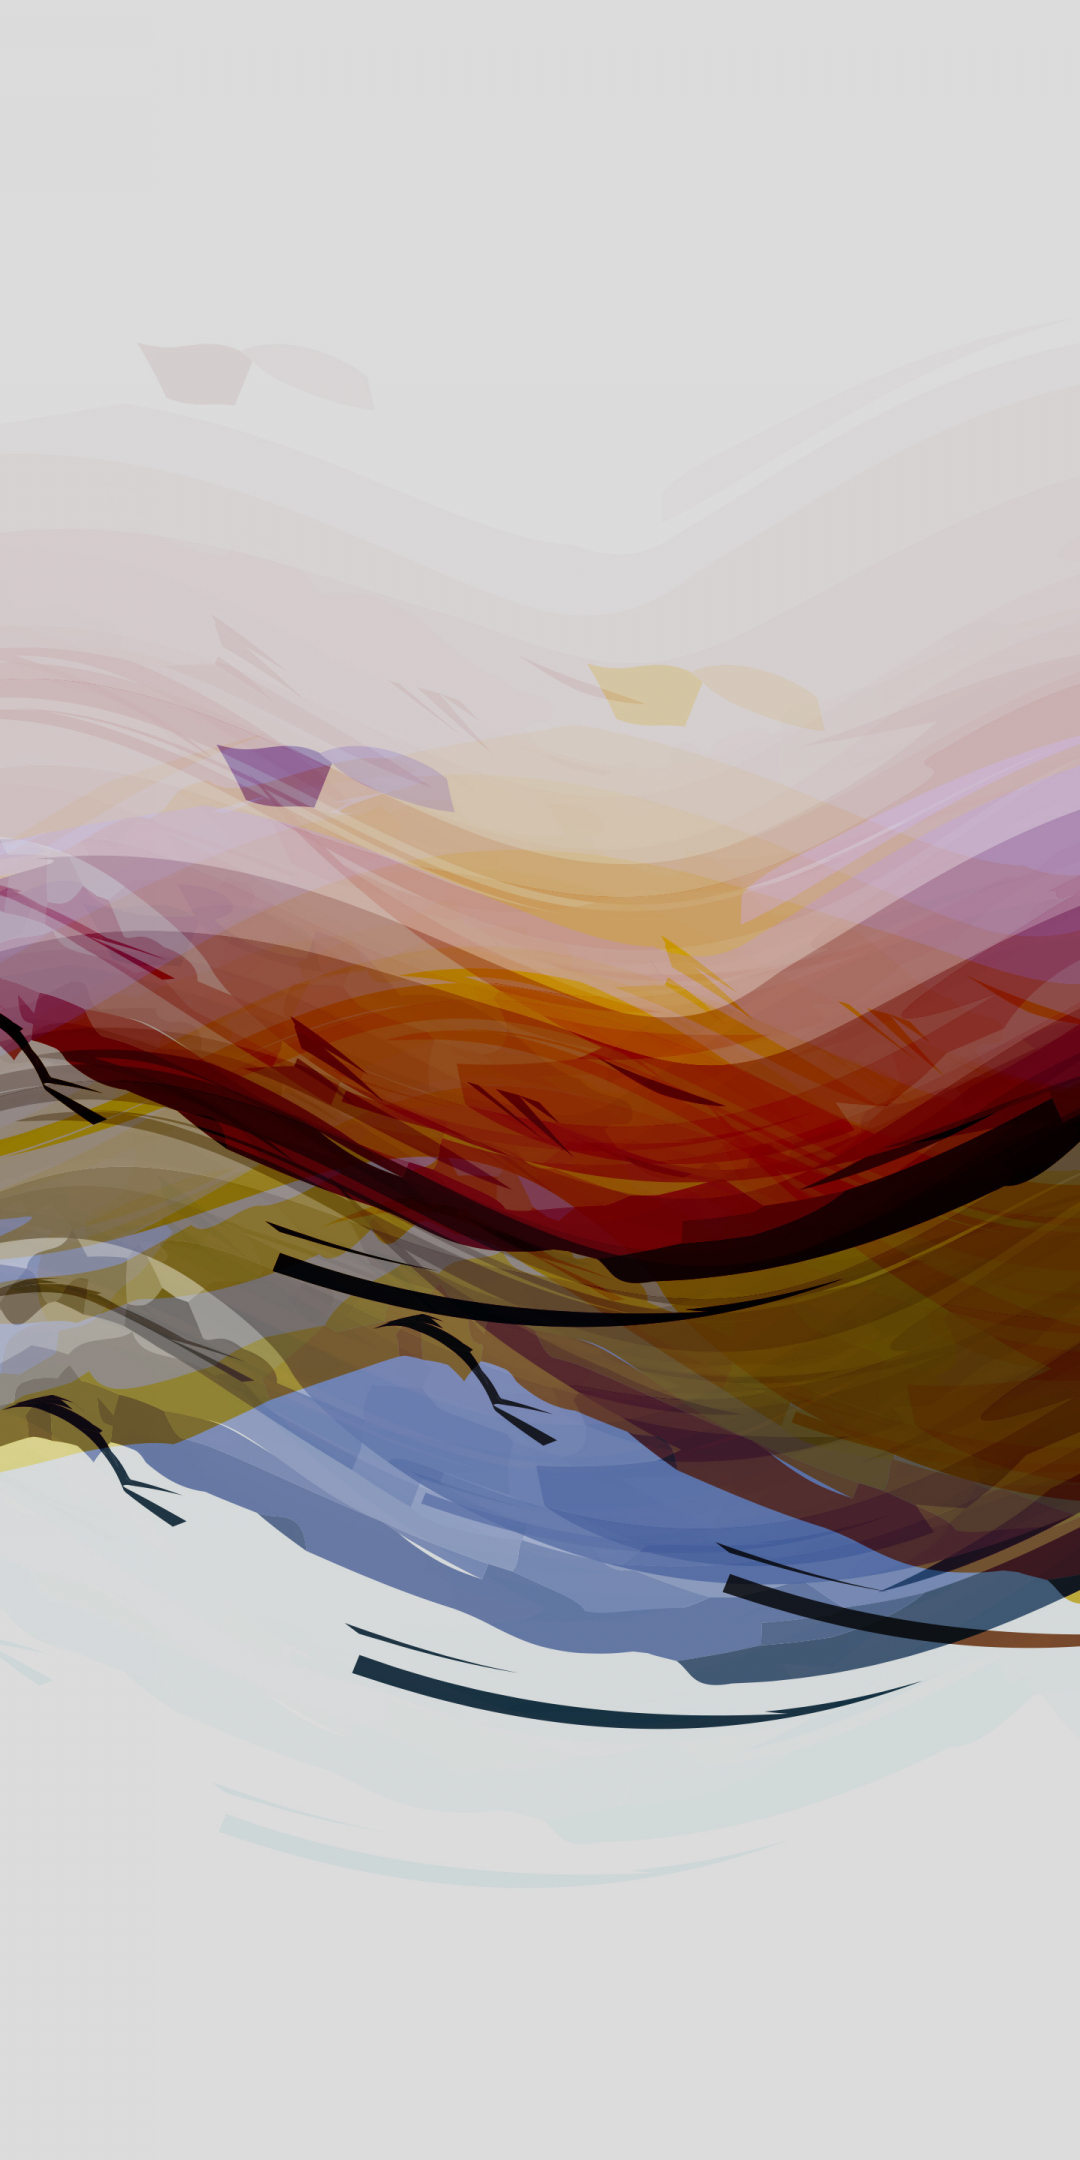 Waves of color, flow, artwork, 1080x2160 wallpaper